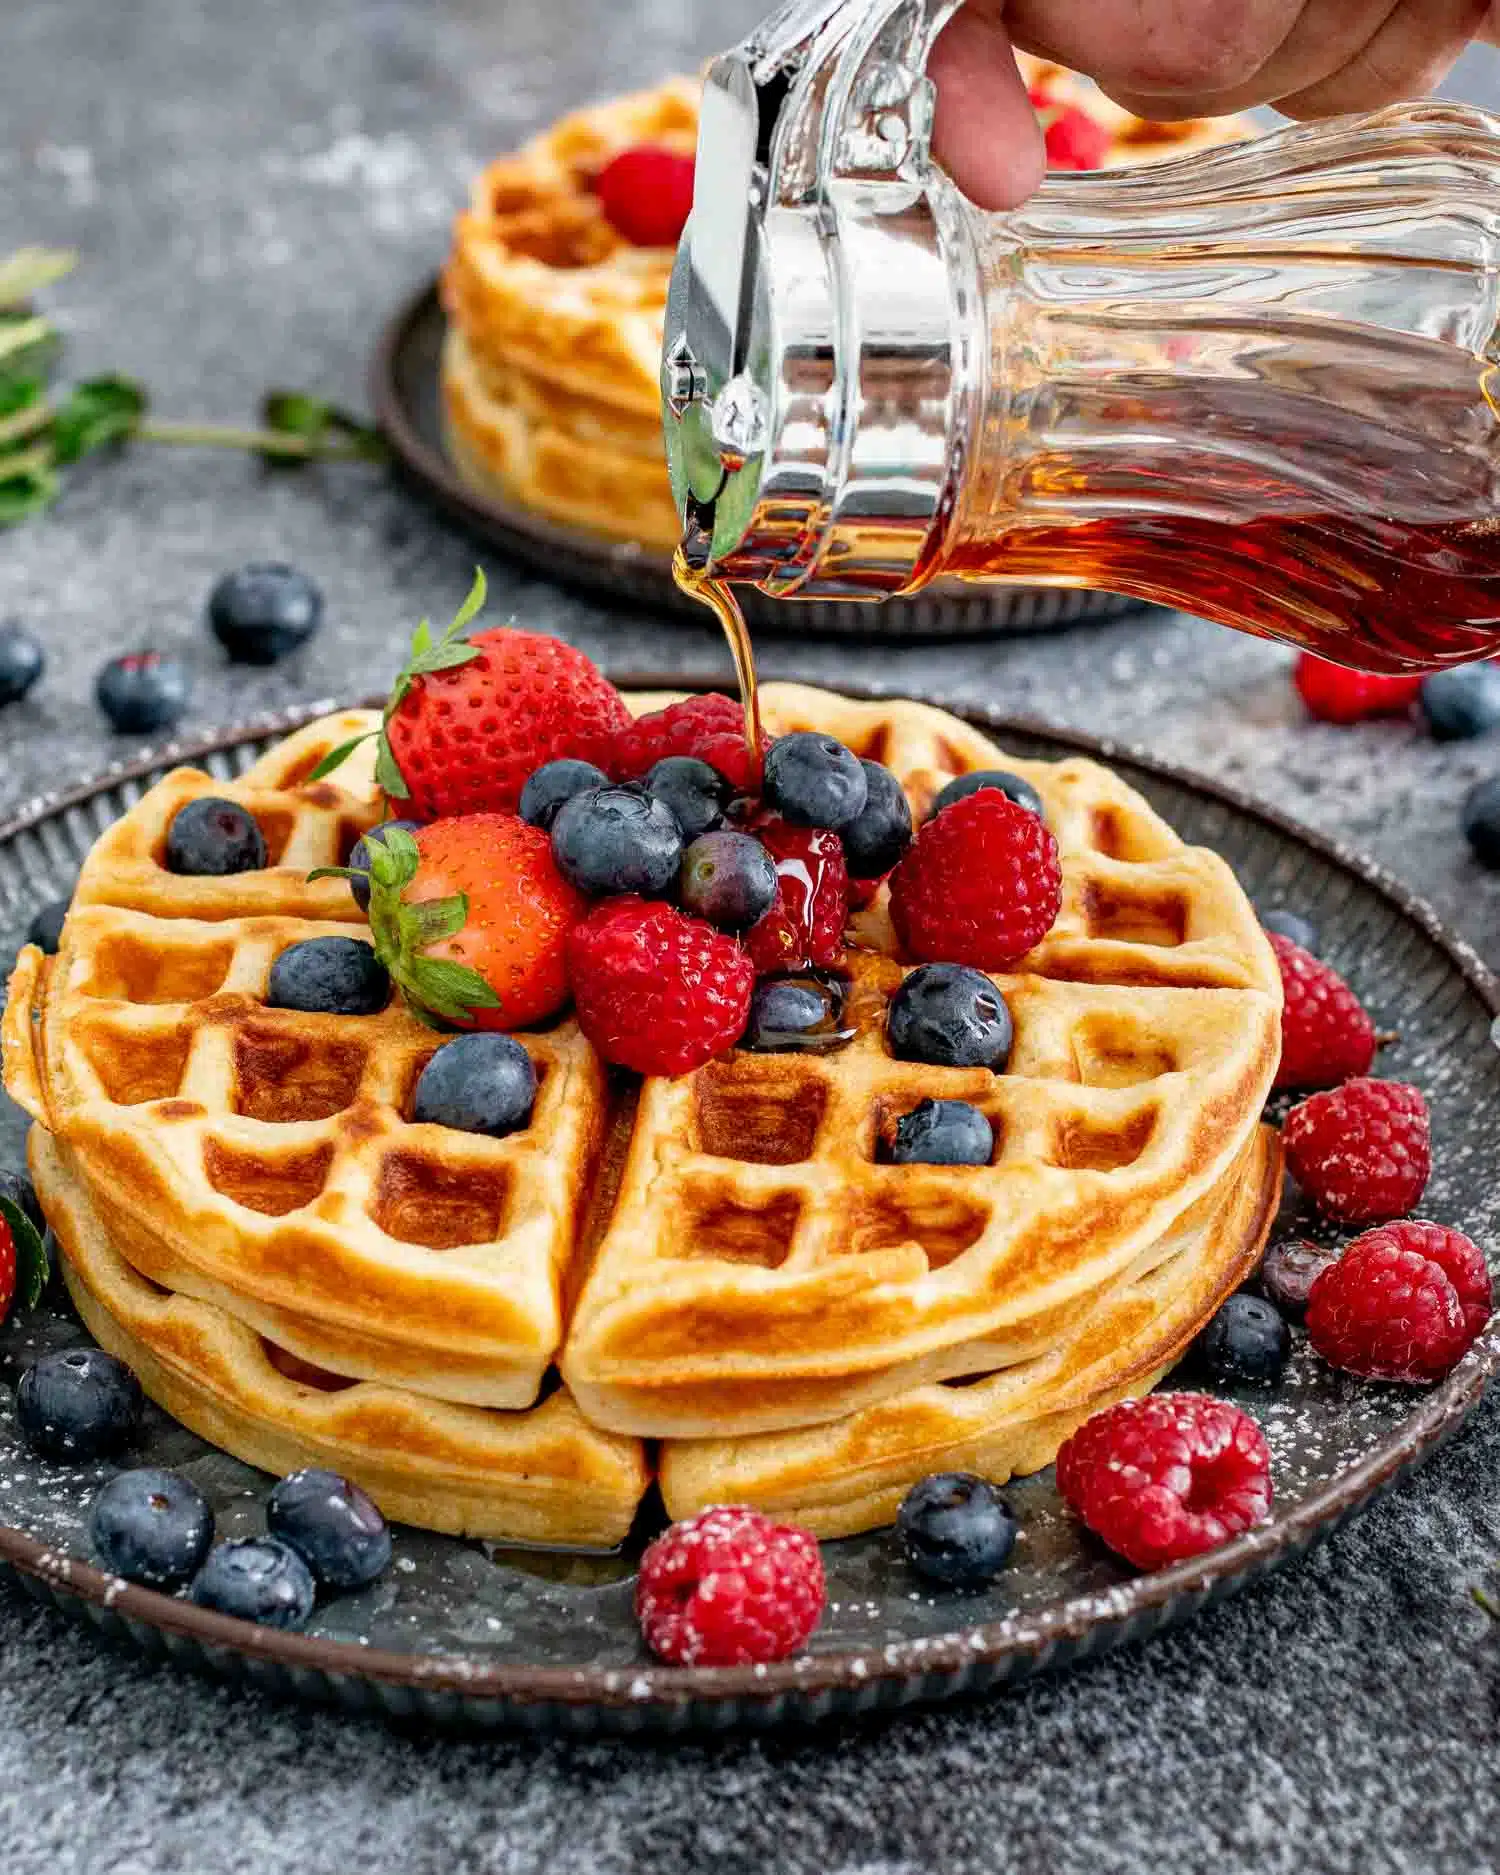 https://cravinghomecooked.com/wp-content/uploads/2019/02/easy-waffle-recipe-1-16.jpg.webp